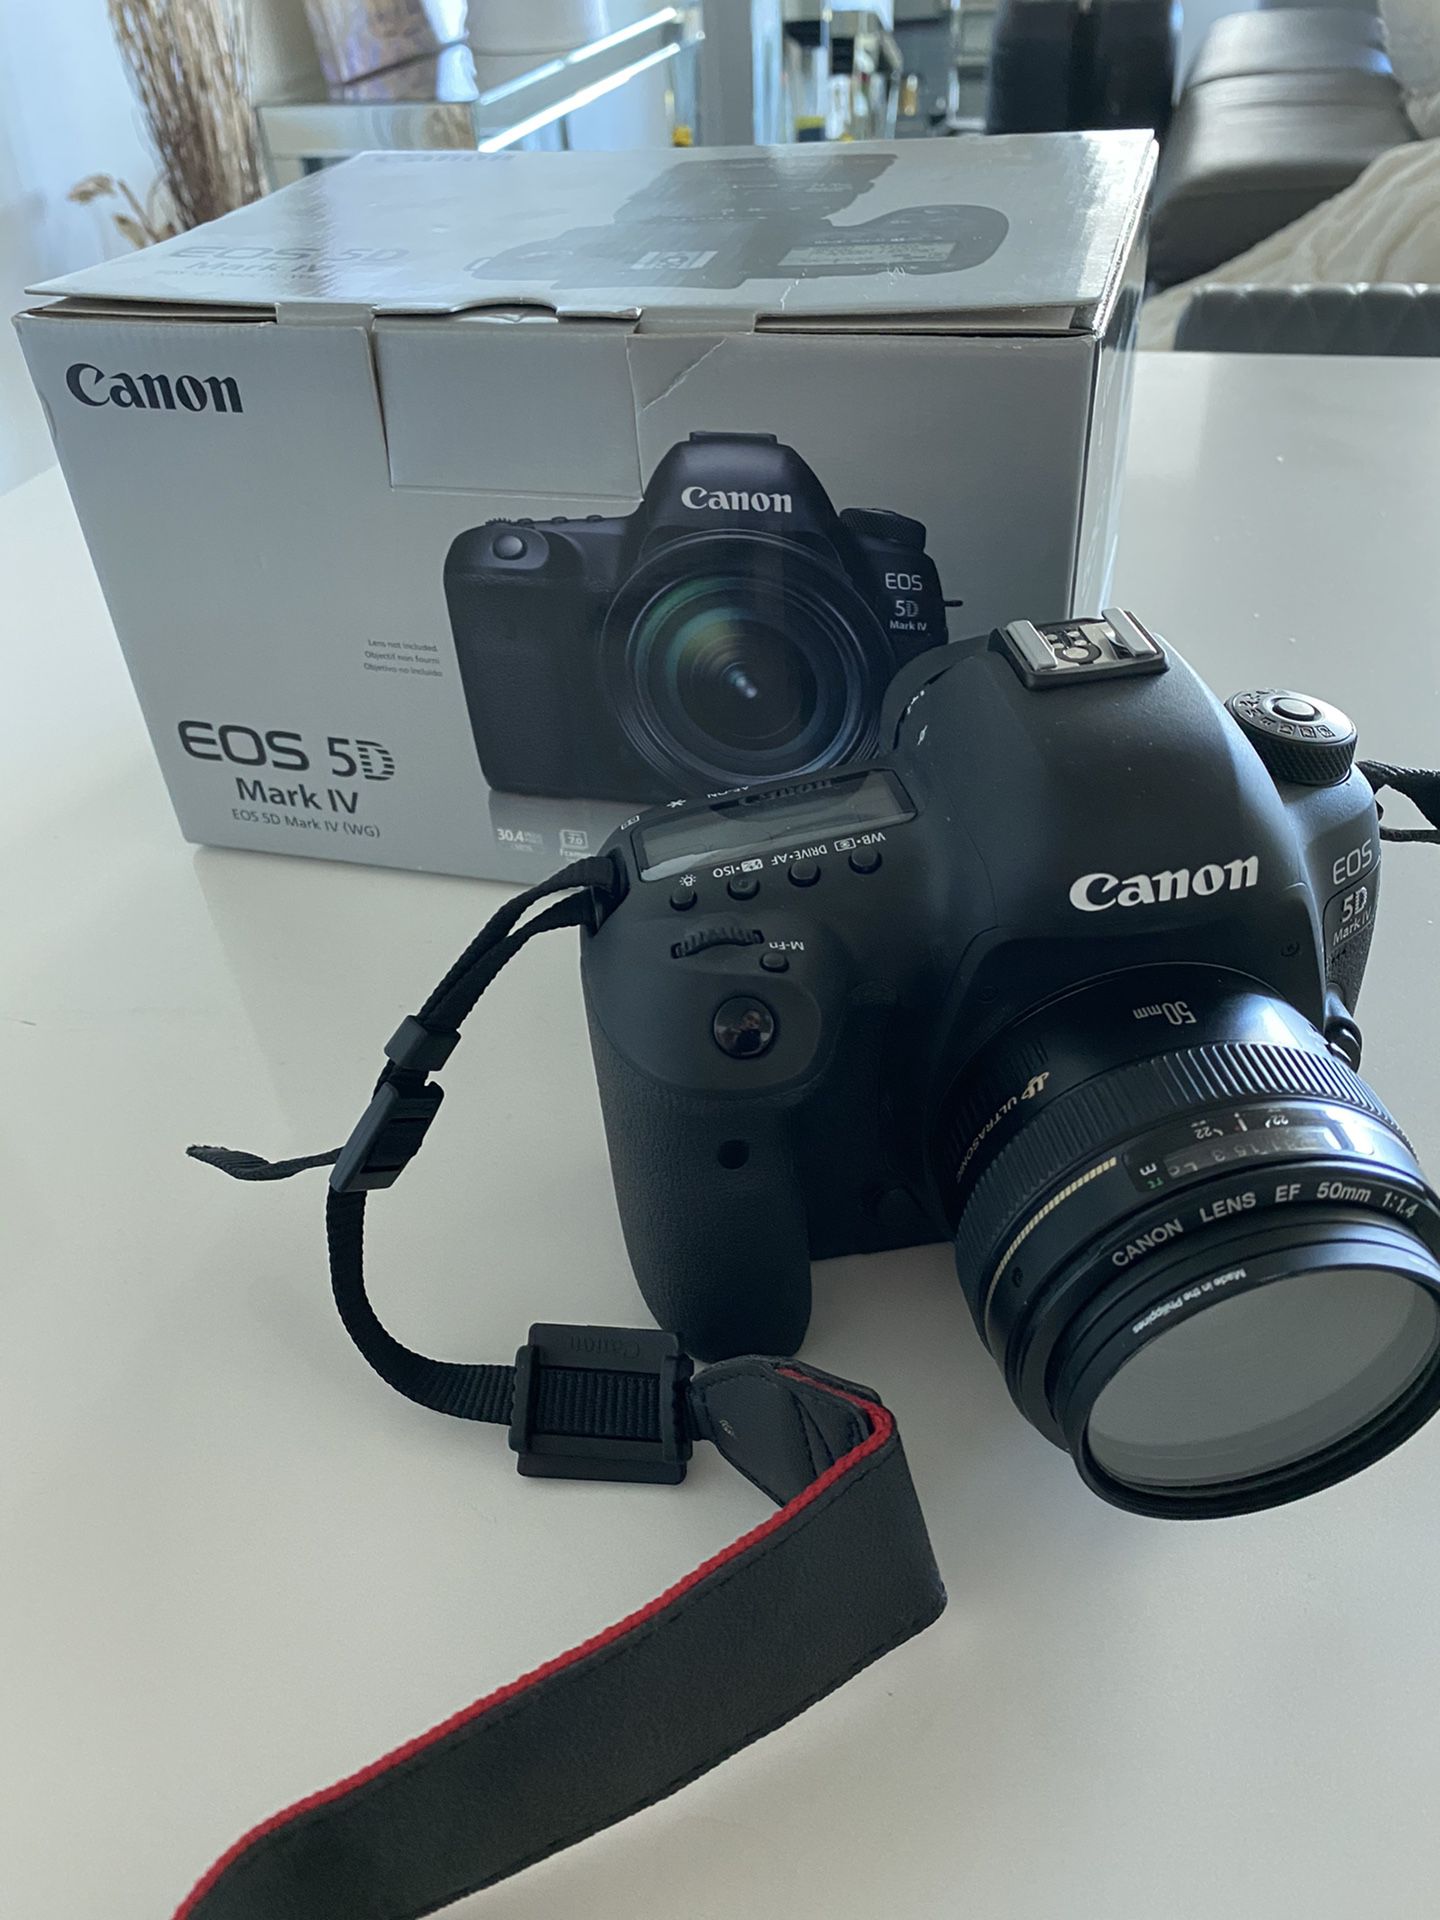 Mark IV Canon EOS Digital Camera with lense